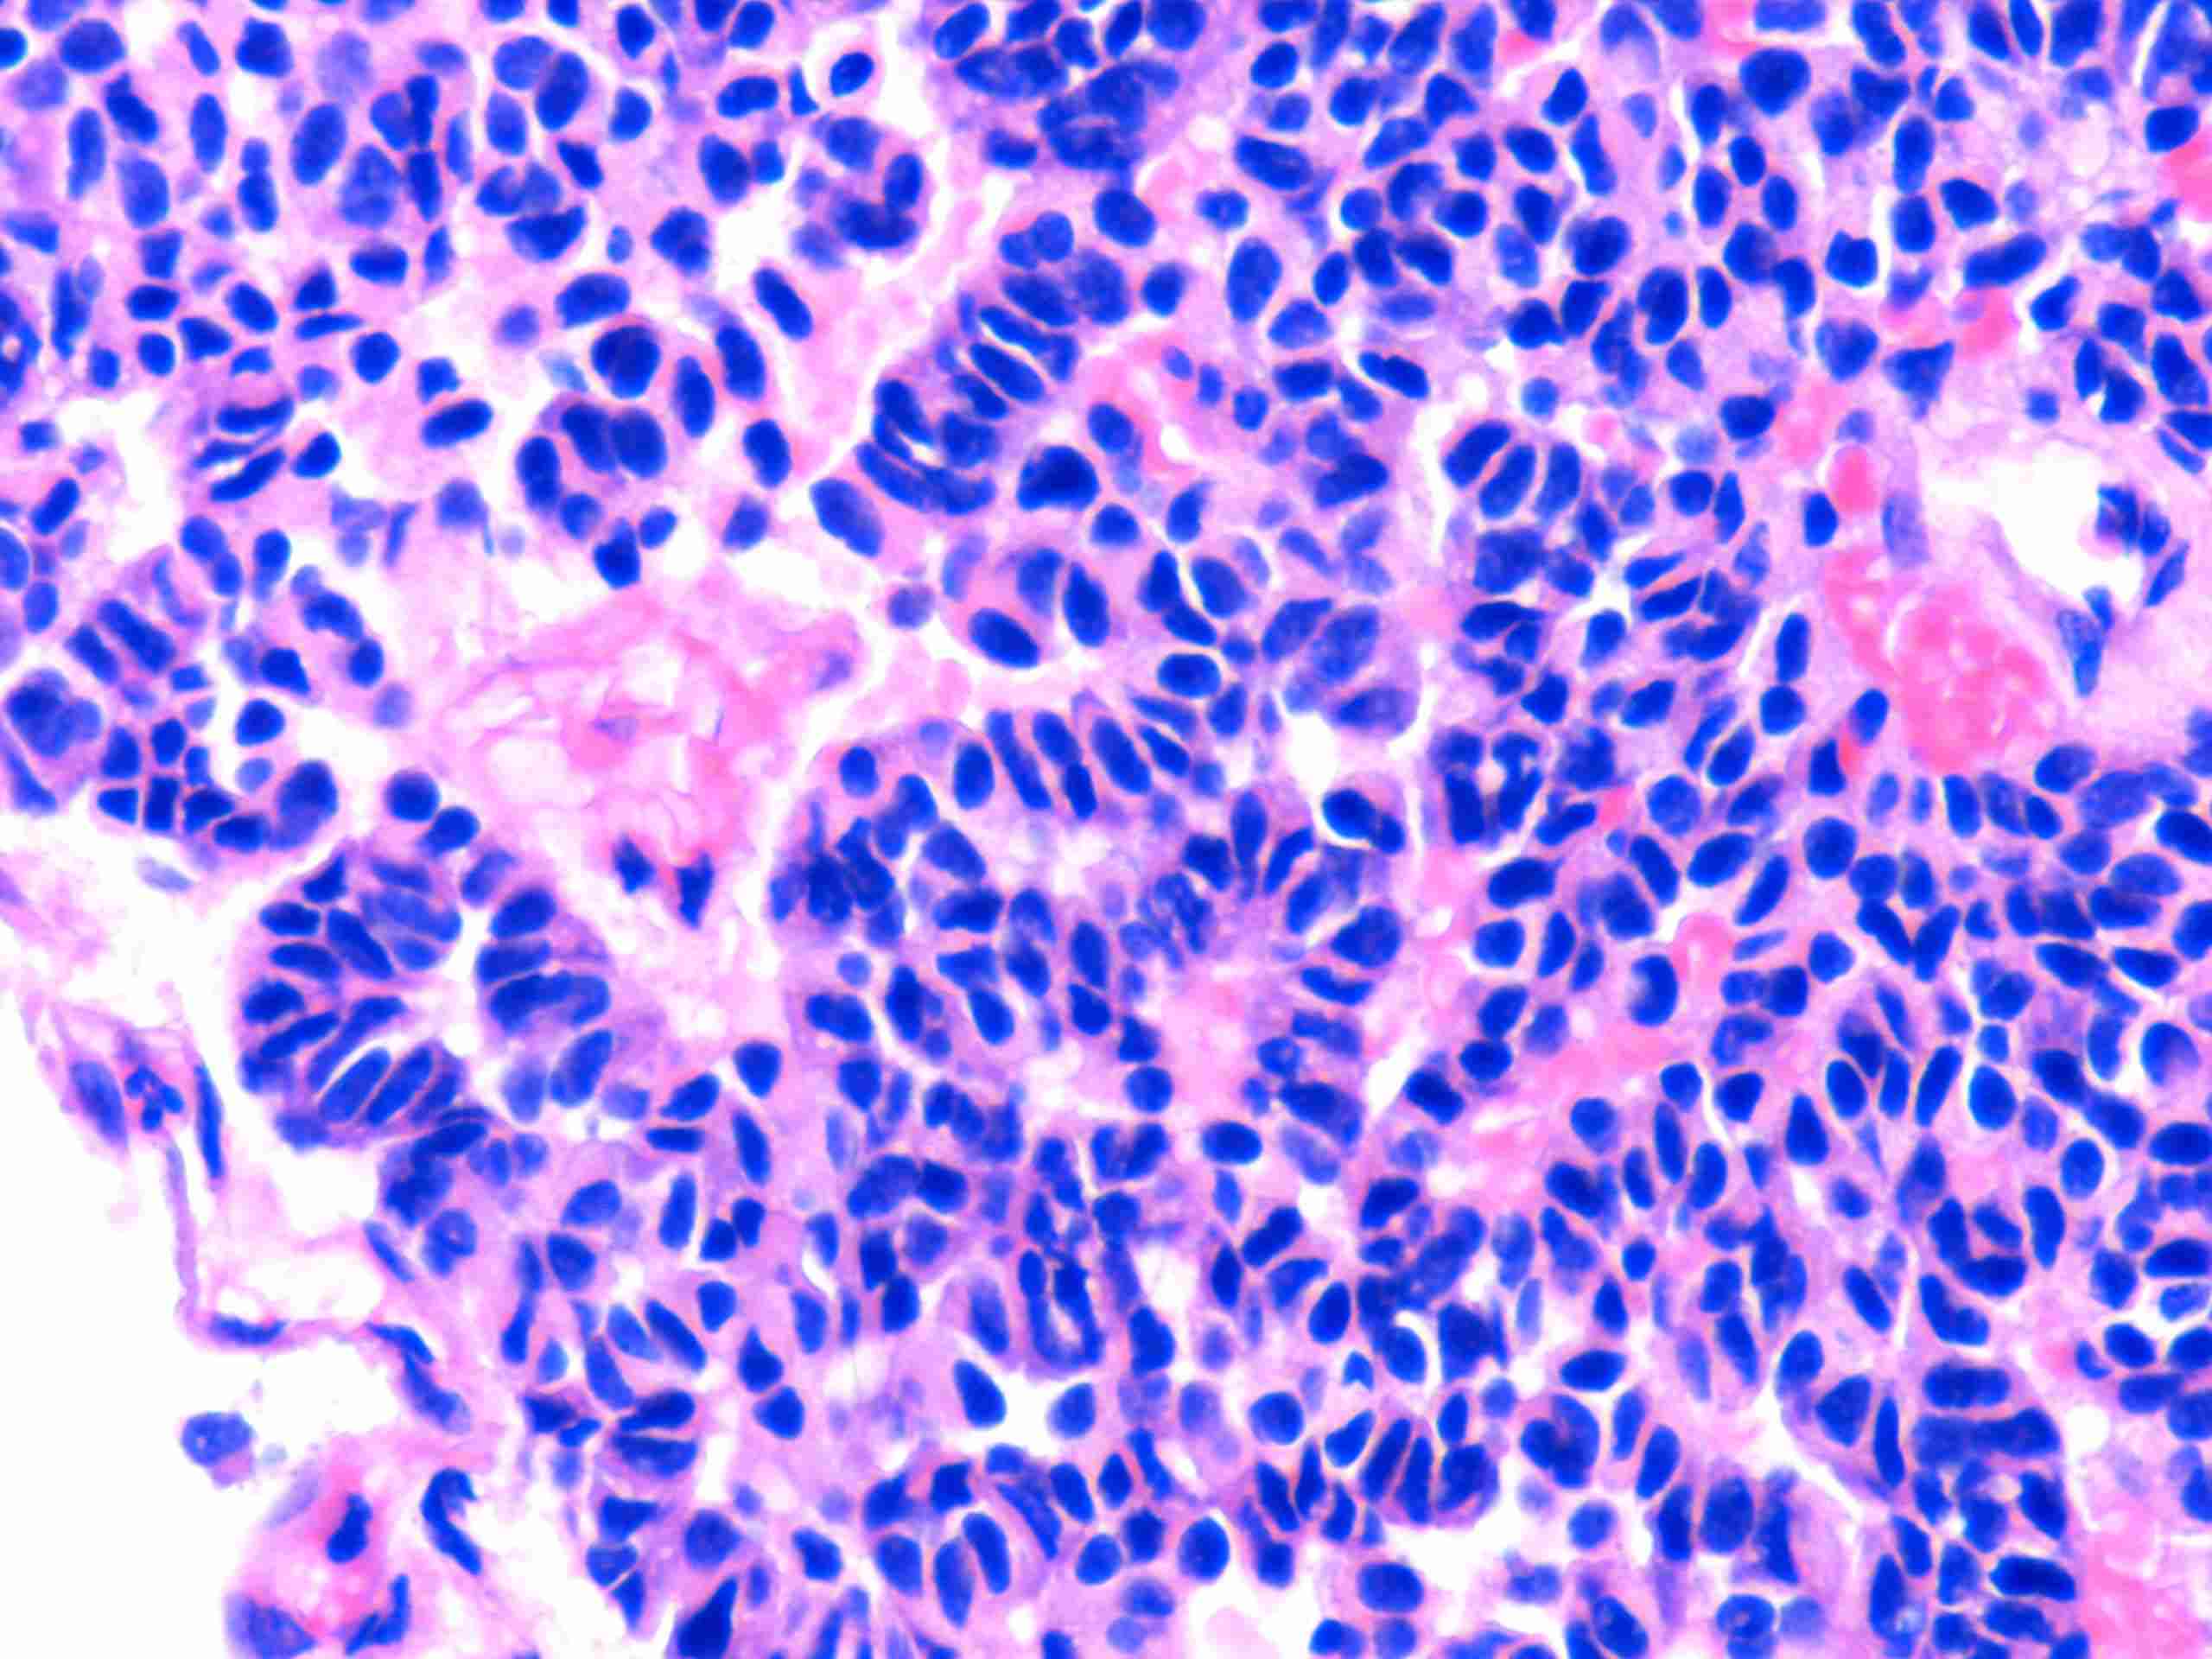 Imagen de Biopsia de masa mediastinal de gran tamao/ Large mediastinal tumour biopsy.